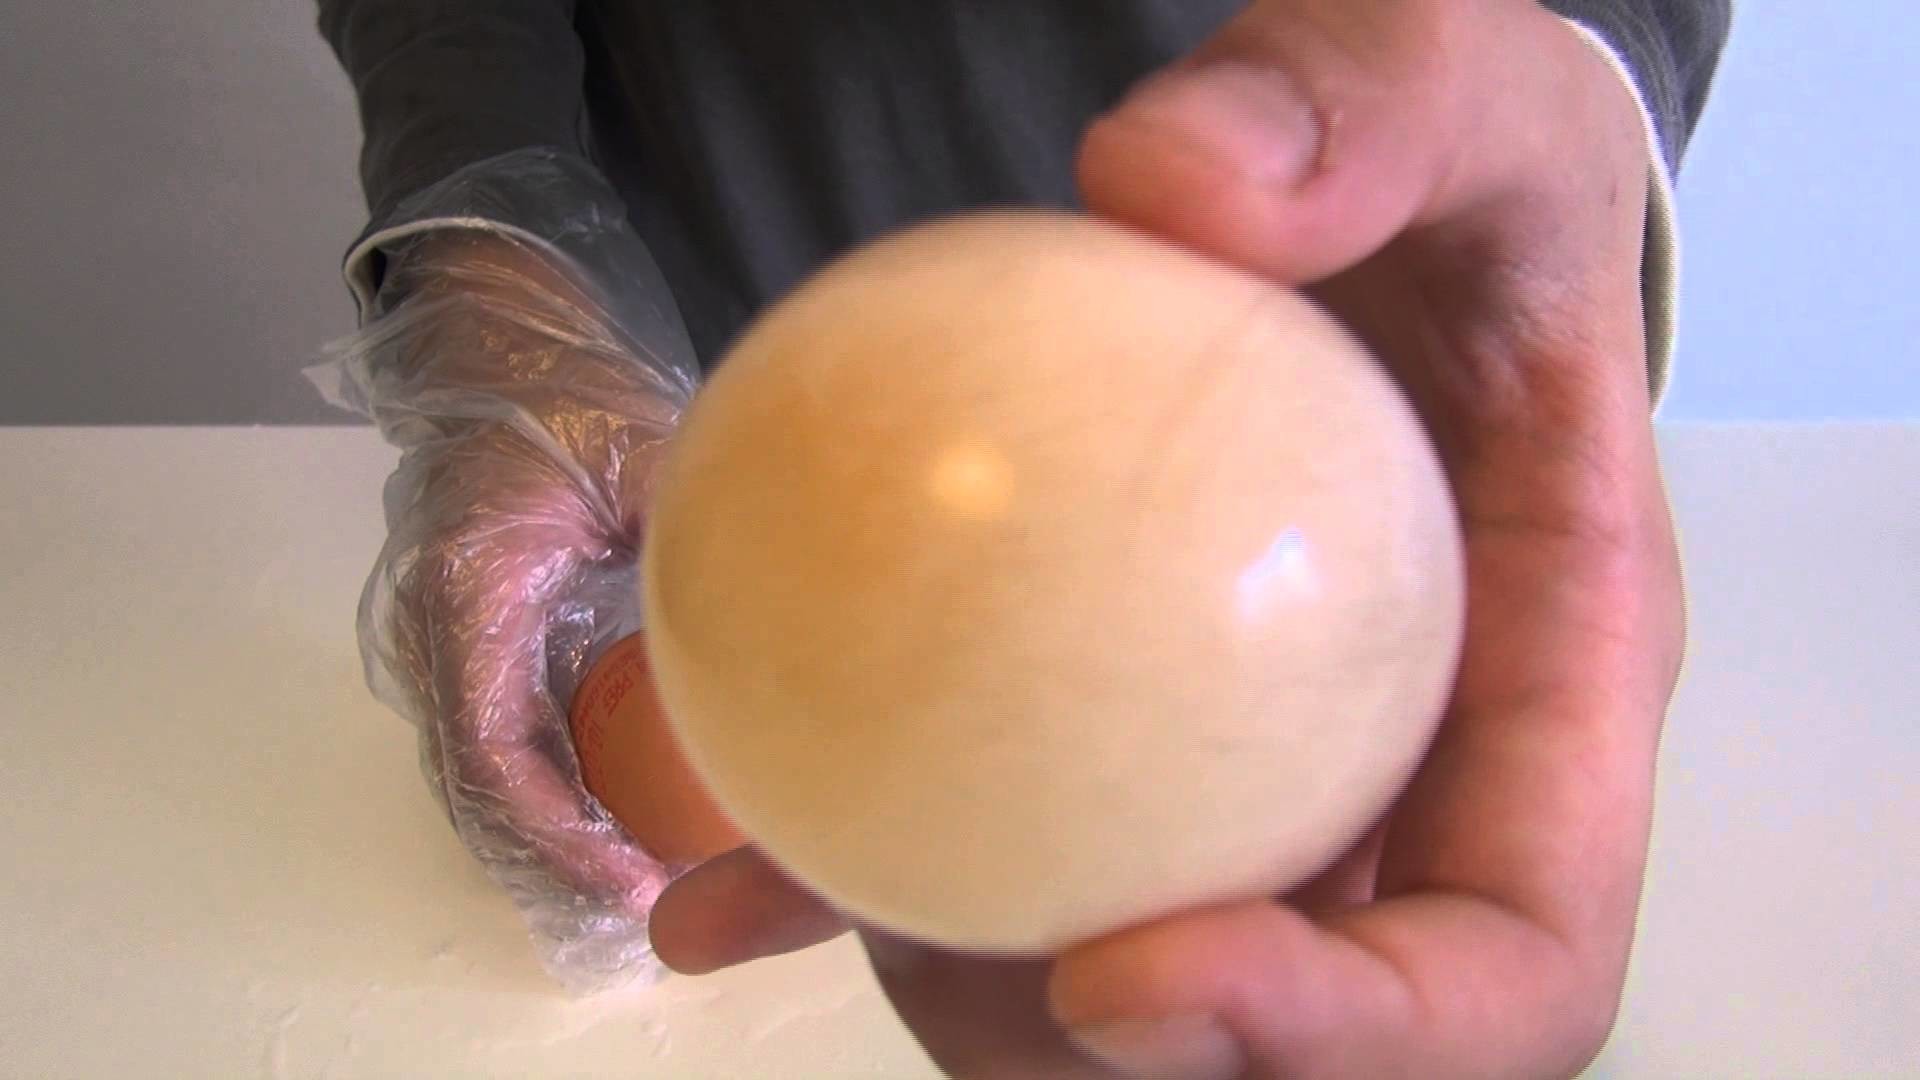 Huevo + Vinagre = Huevo Saltarín. Increbile experimento quimico casero